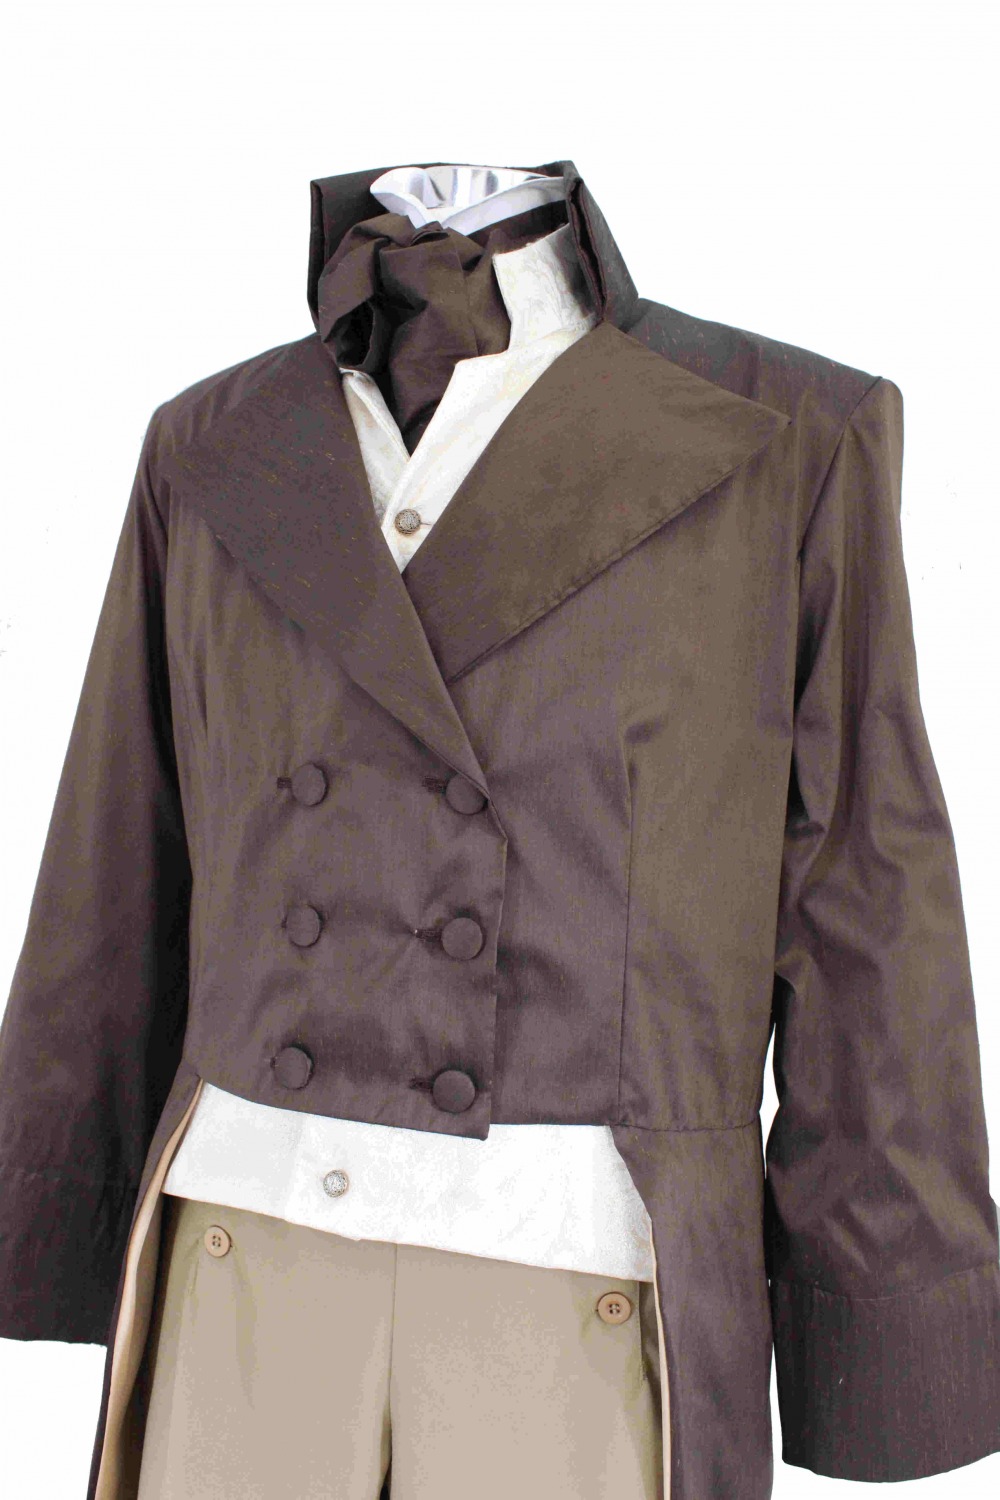 Men's Deluxe Regency Mr. Darcy Victorian Costume Size L/XL - Complete ...